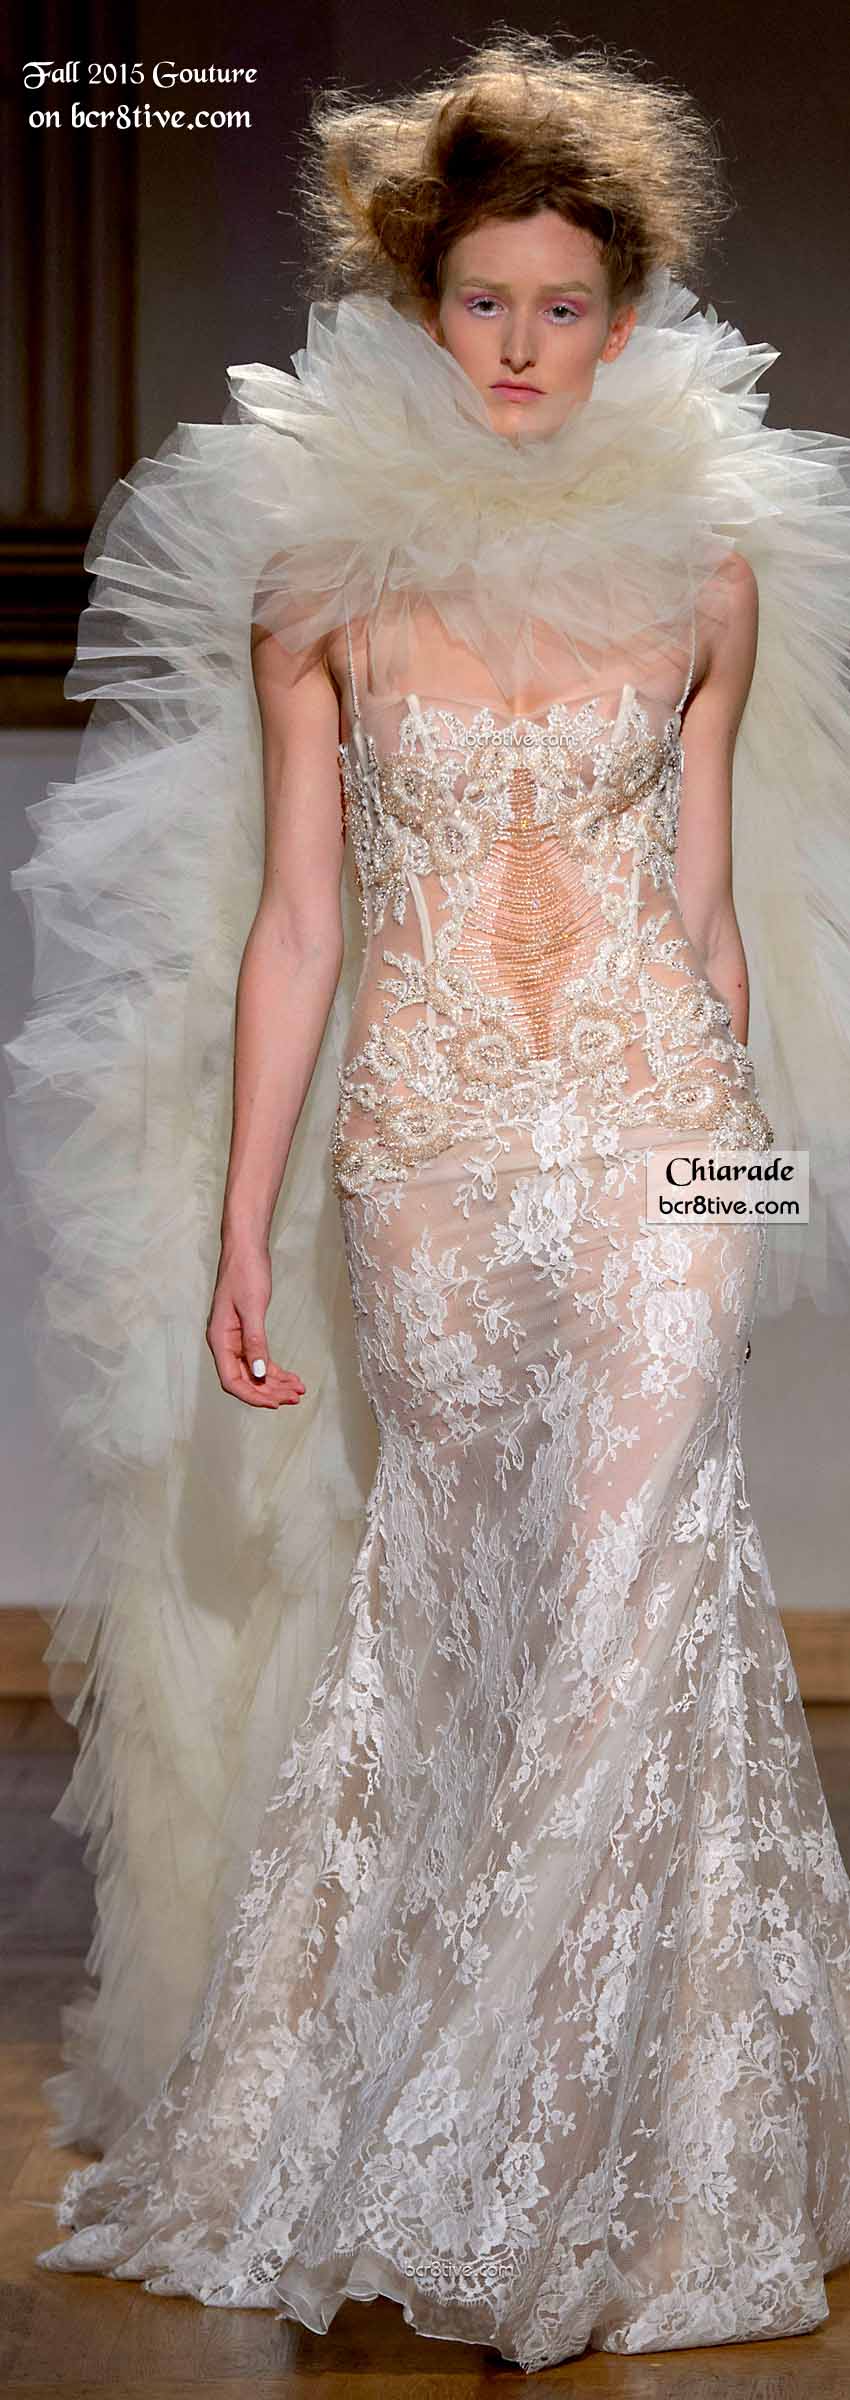 Chiarade Couture Fall 2015-16